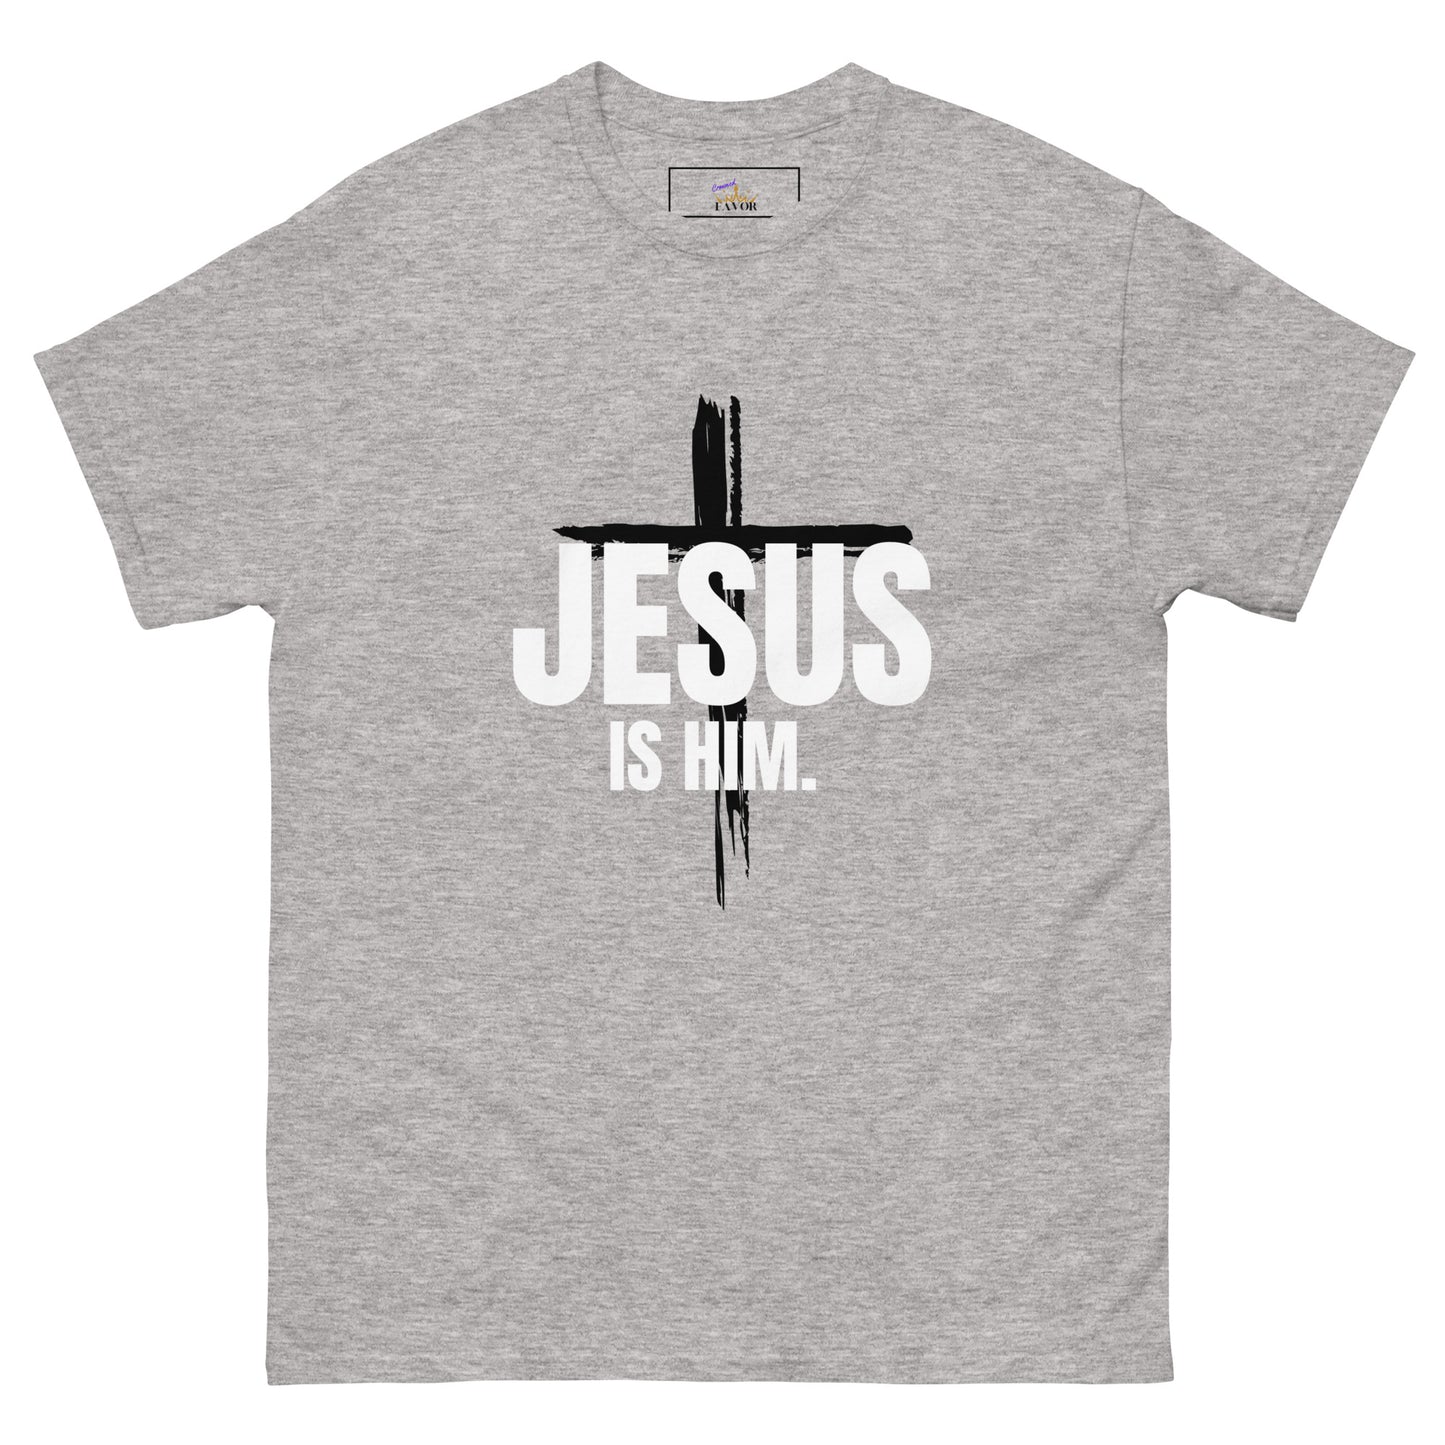 Jesus = Him (unisex tee)